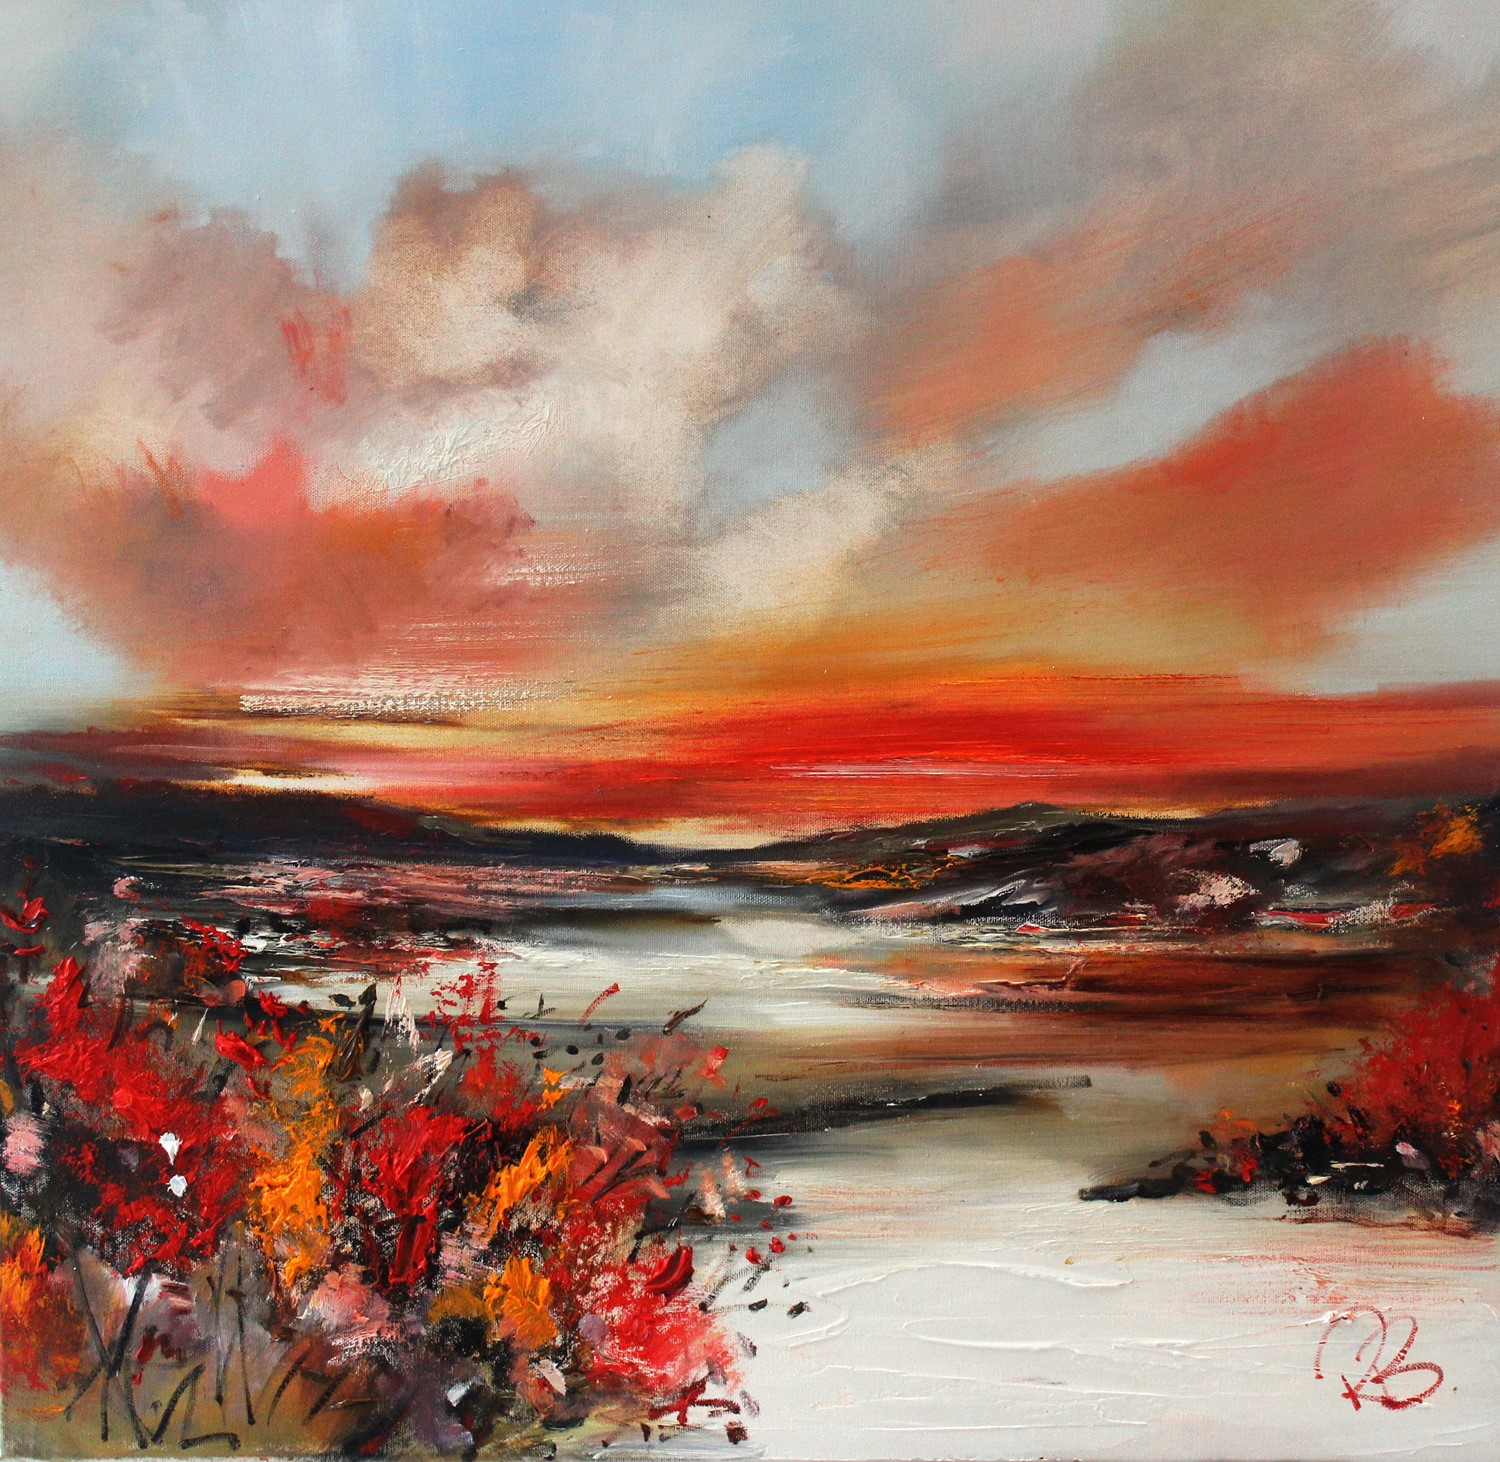 'Mid Autumn' by artist Rosanne Barr